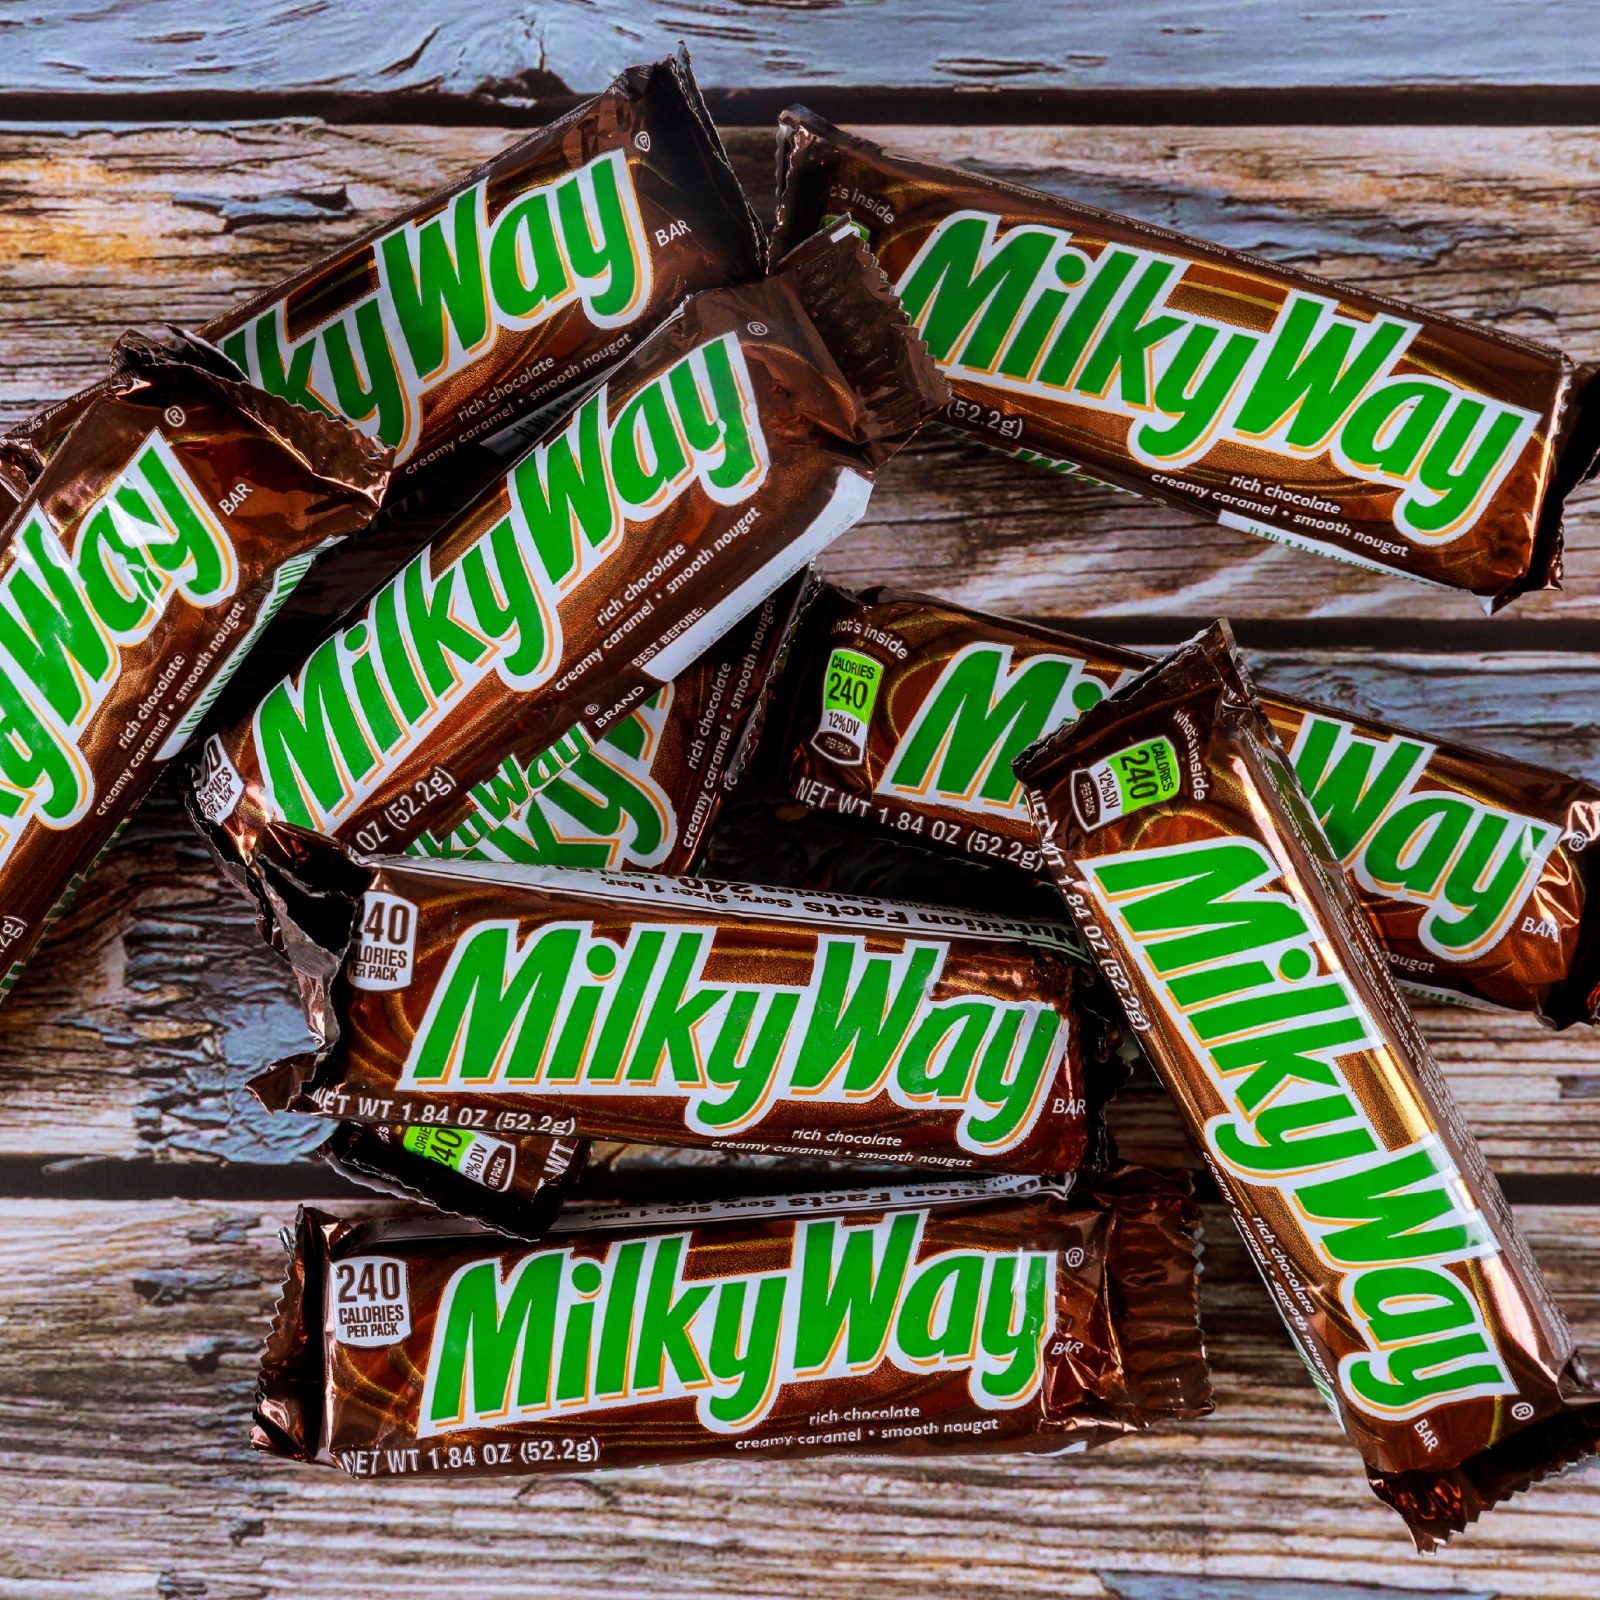 https://d.newsweek.com/en/full/1624280/1923-mars-releases-milky-way-candy-bars.jpg?w=1600&h=1600&q=88&f=504aedc0665360693f5c868ab3393e21